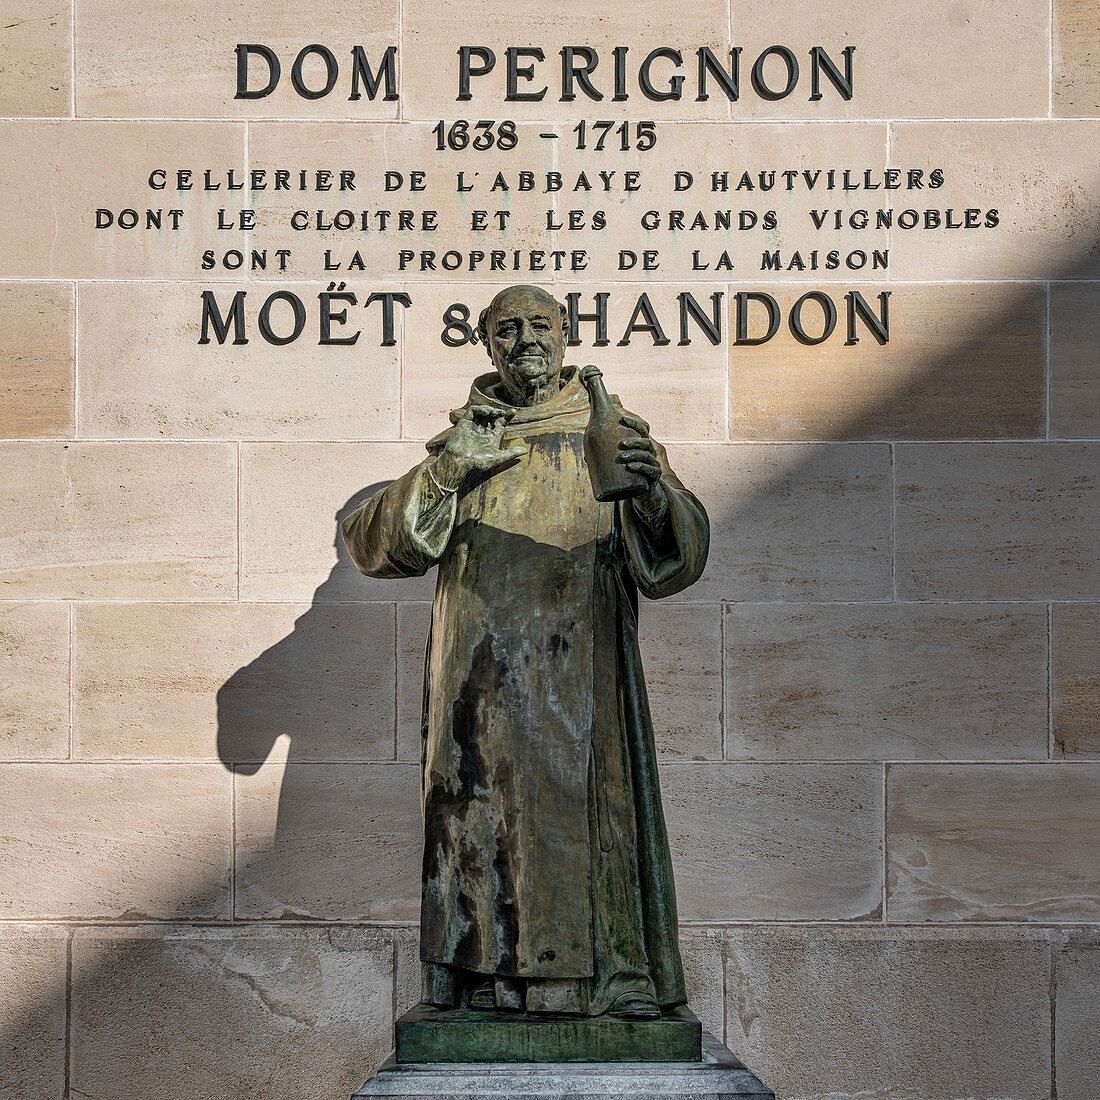 Statue von Dom Perignon, Moet et Chandon, LVMH, Louis Vuitton Moet Hennessy Gruppe, Epernay, Champagne, Frankreich